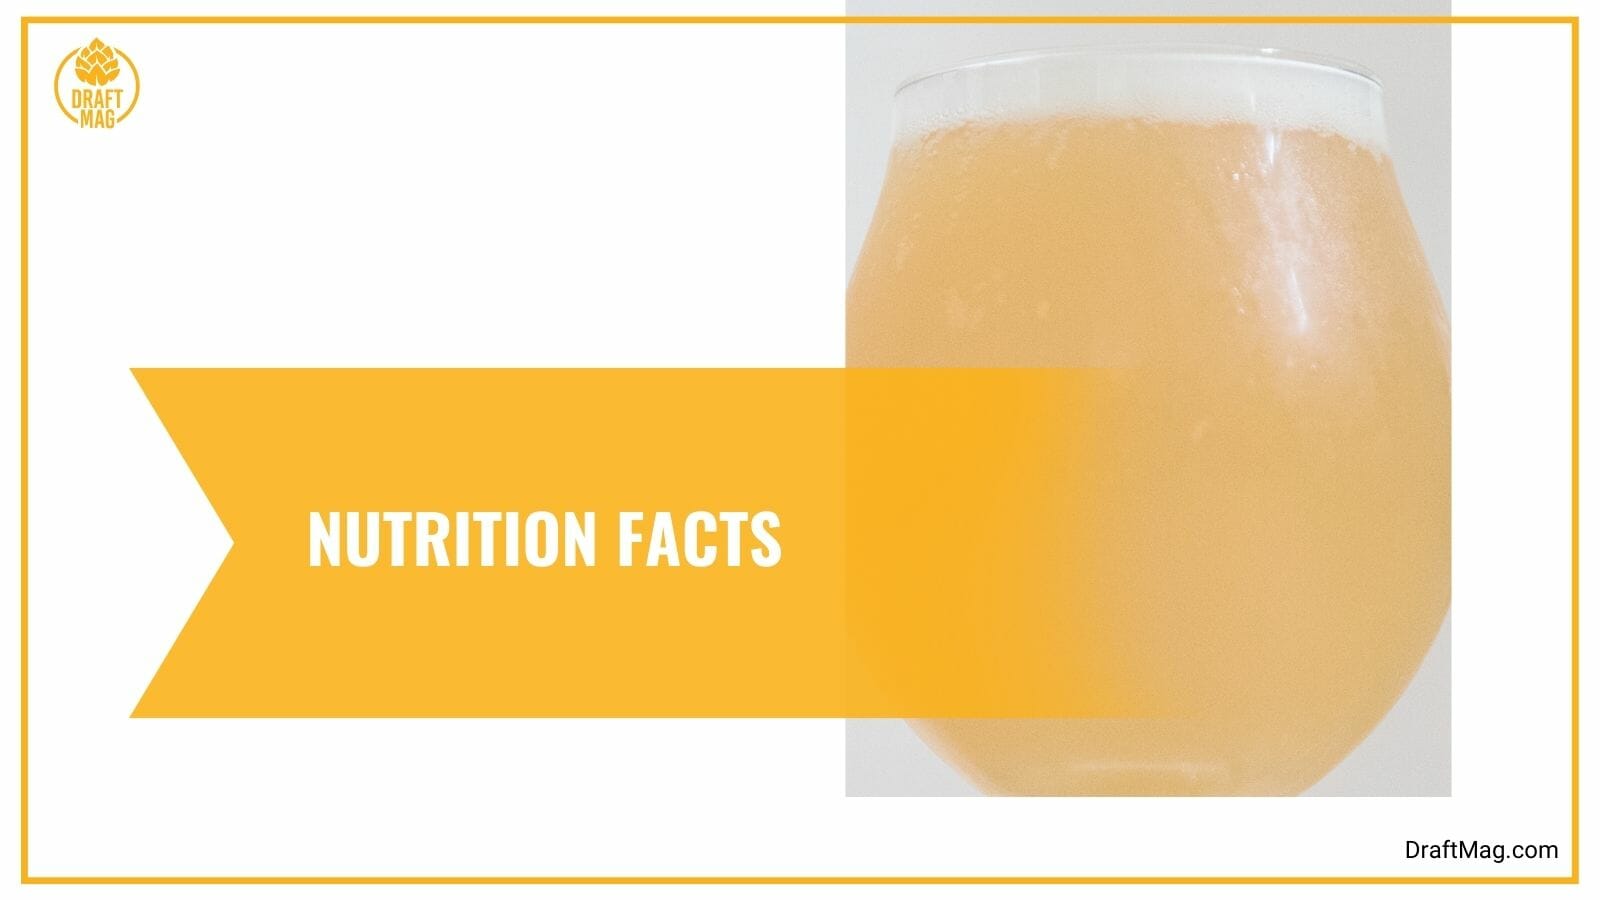 Nutrition Facts of Hazy Wonder IPA